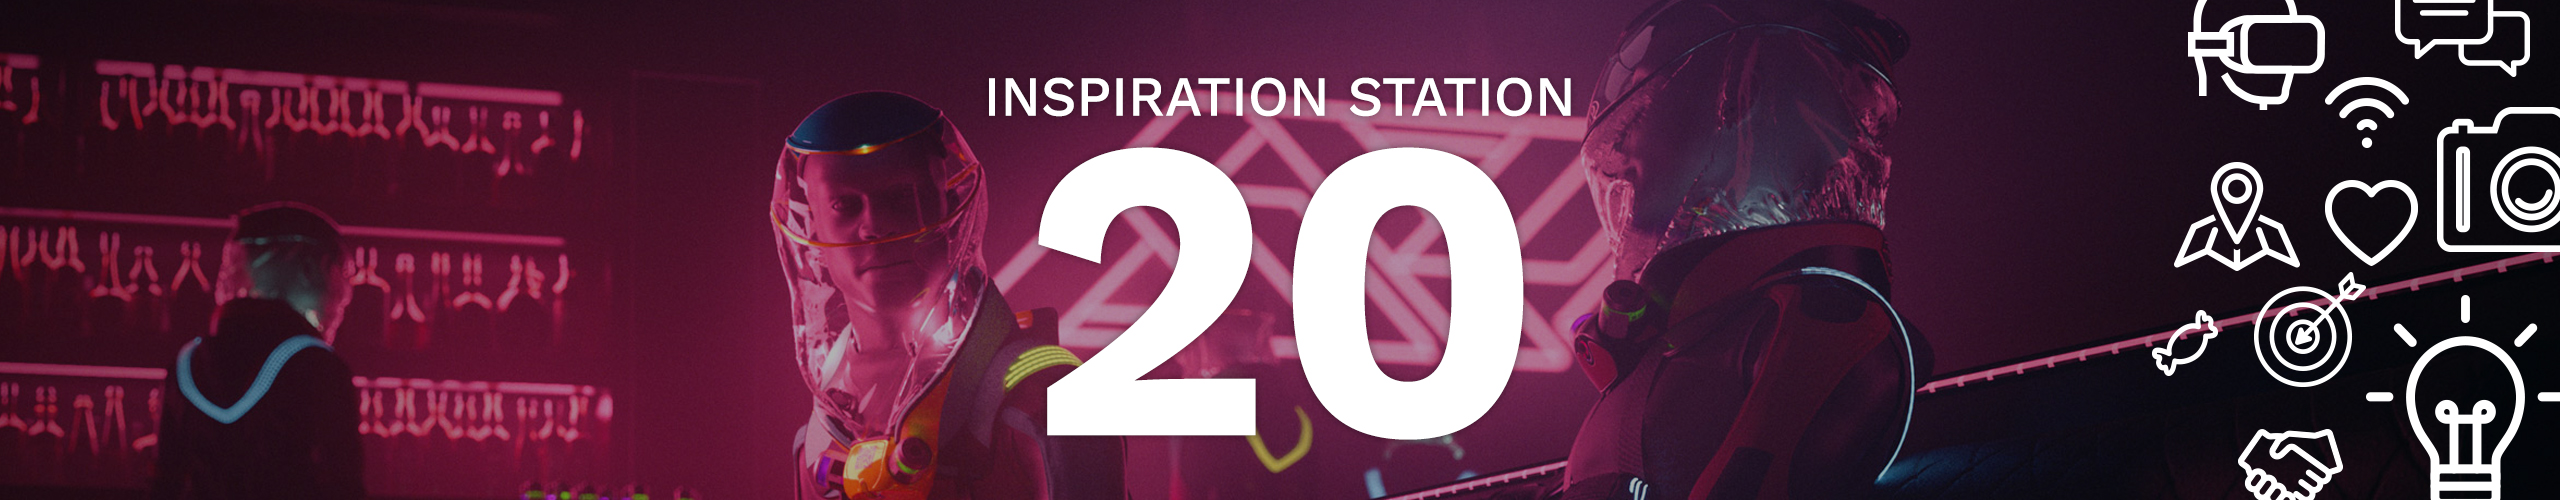 Inspiration Station Vol. 20: Positive Change